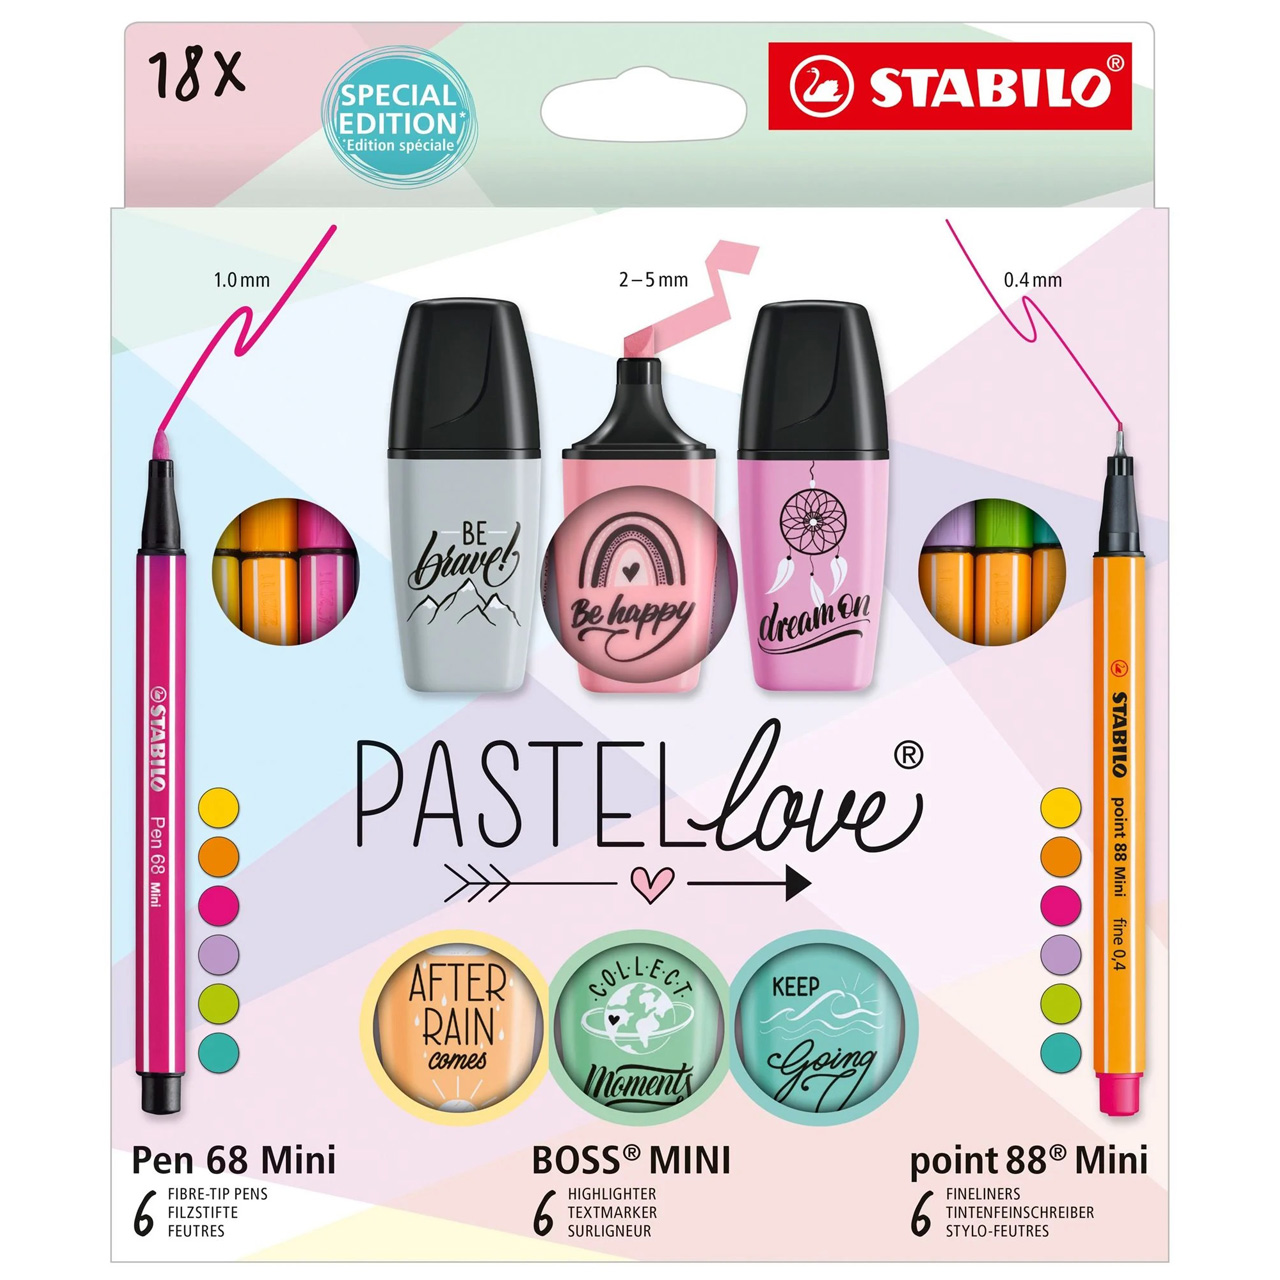 Stabilo-Pastellove-Mini-World-6x-pen-68-mini-6x-boss-mini-6x-point-88-mini-18er-set-online-kaufen-lafueliki